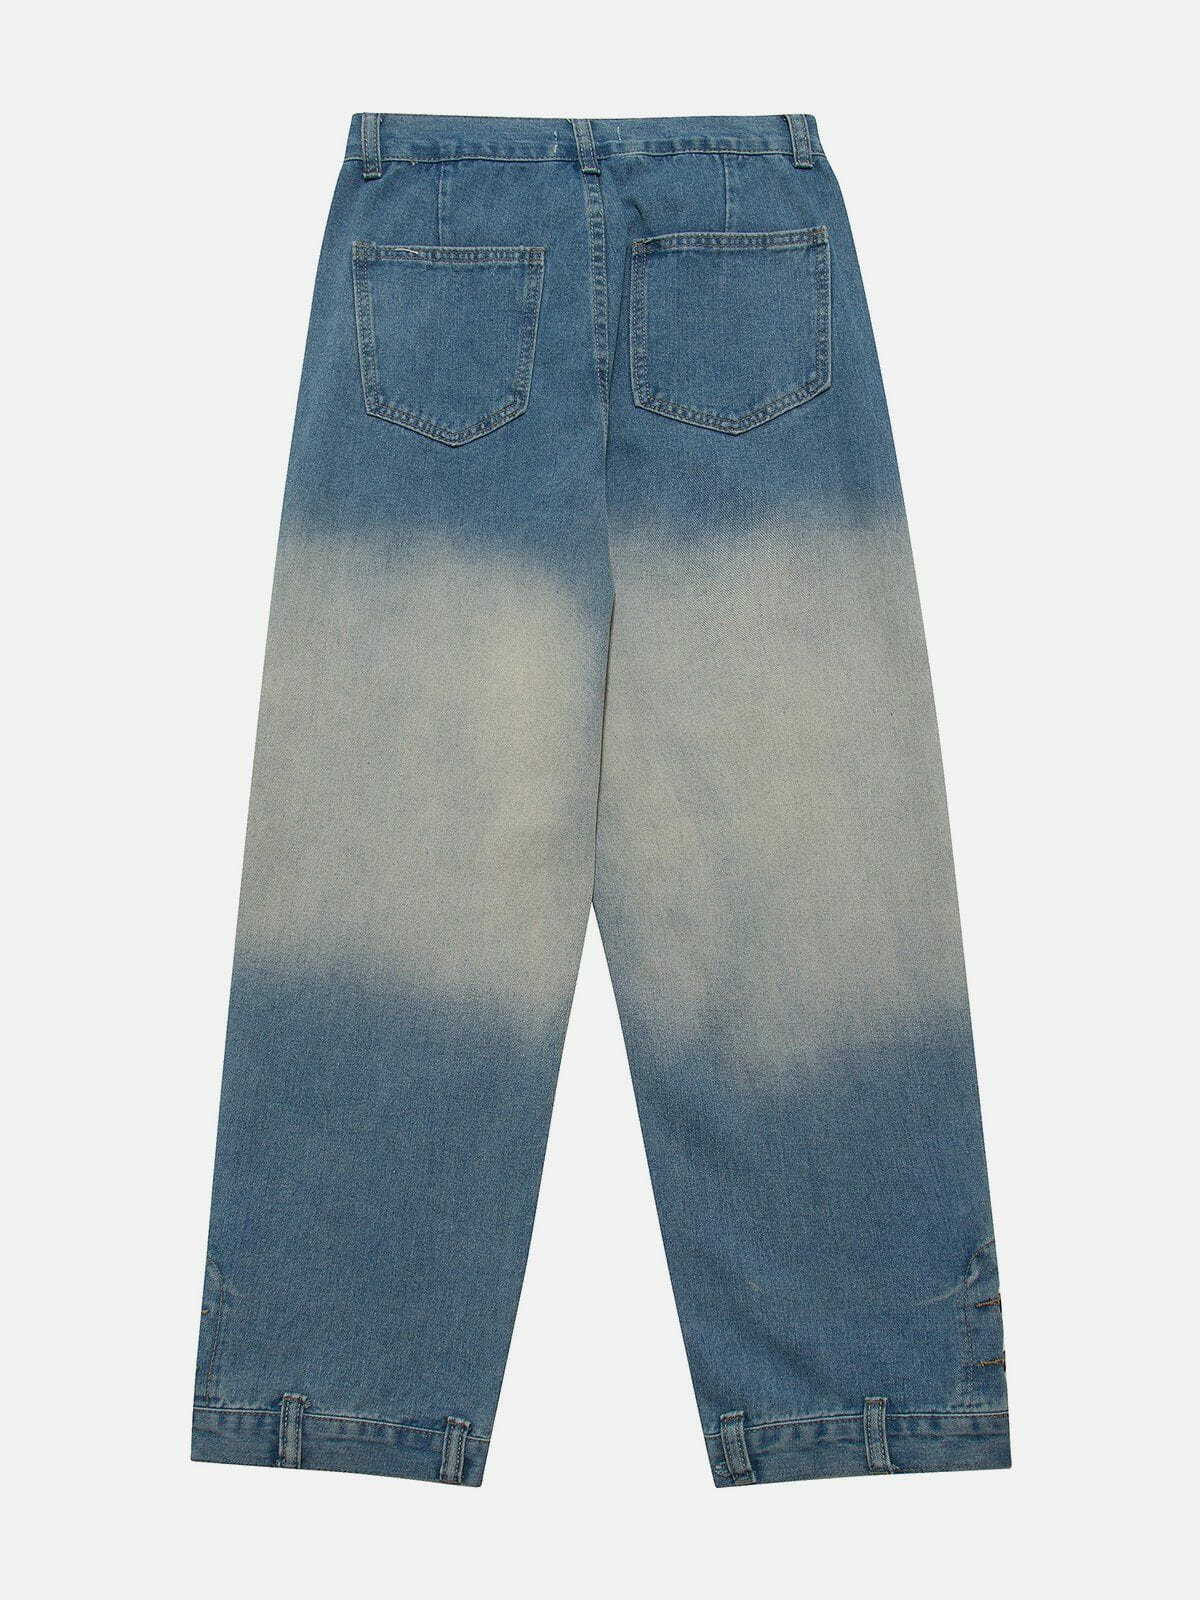 patchwork gradient jeans retro urban chic 7295